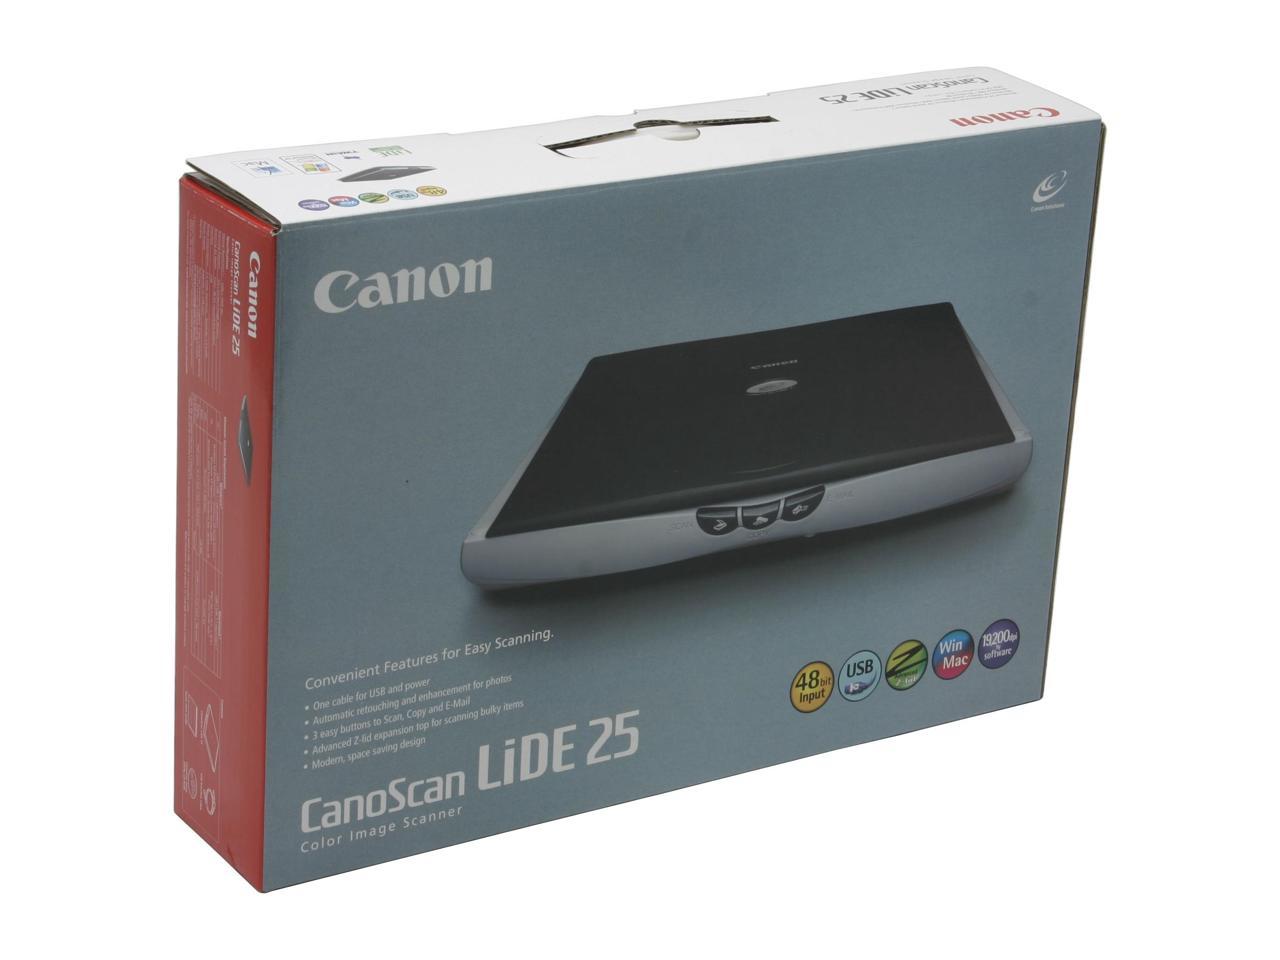 canon lide 25 scanner driver for windows 7 32 bit